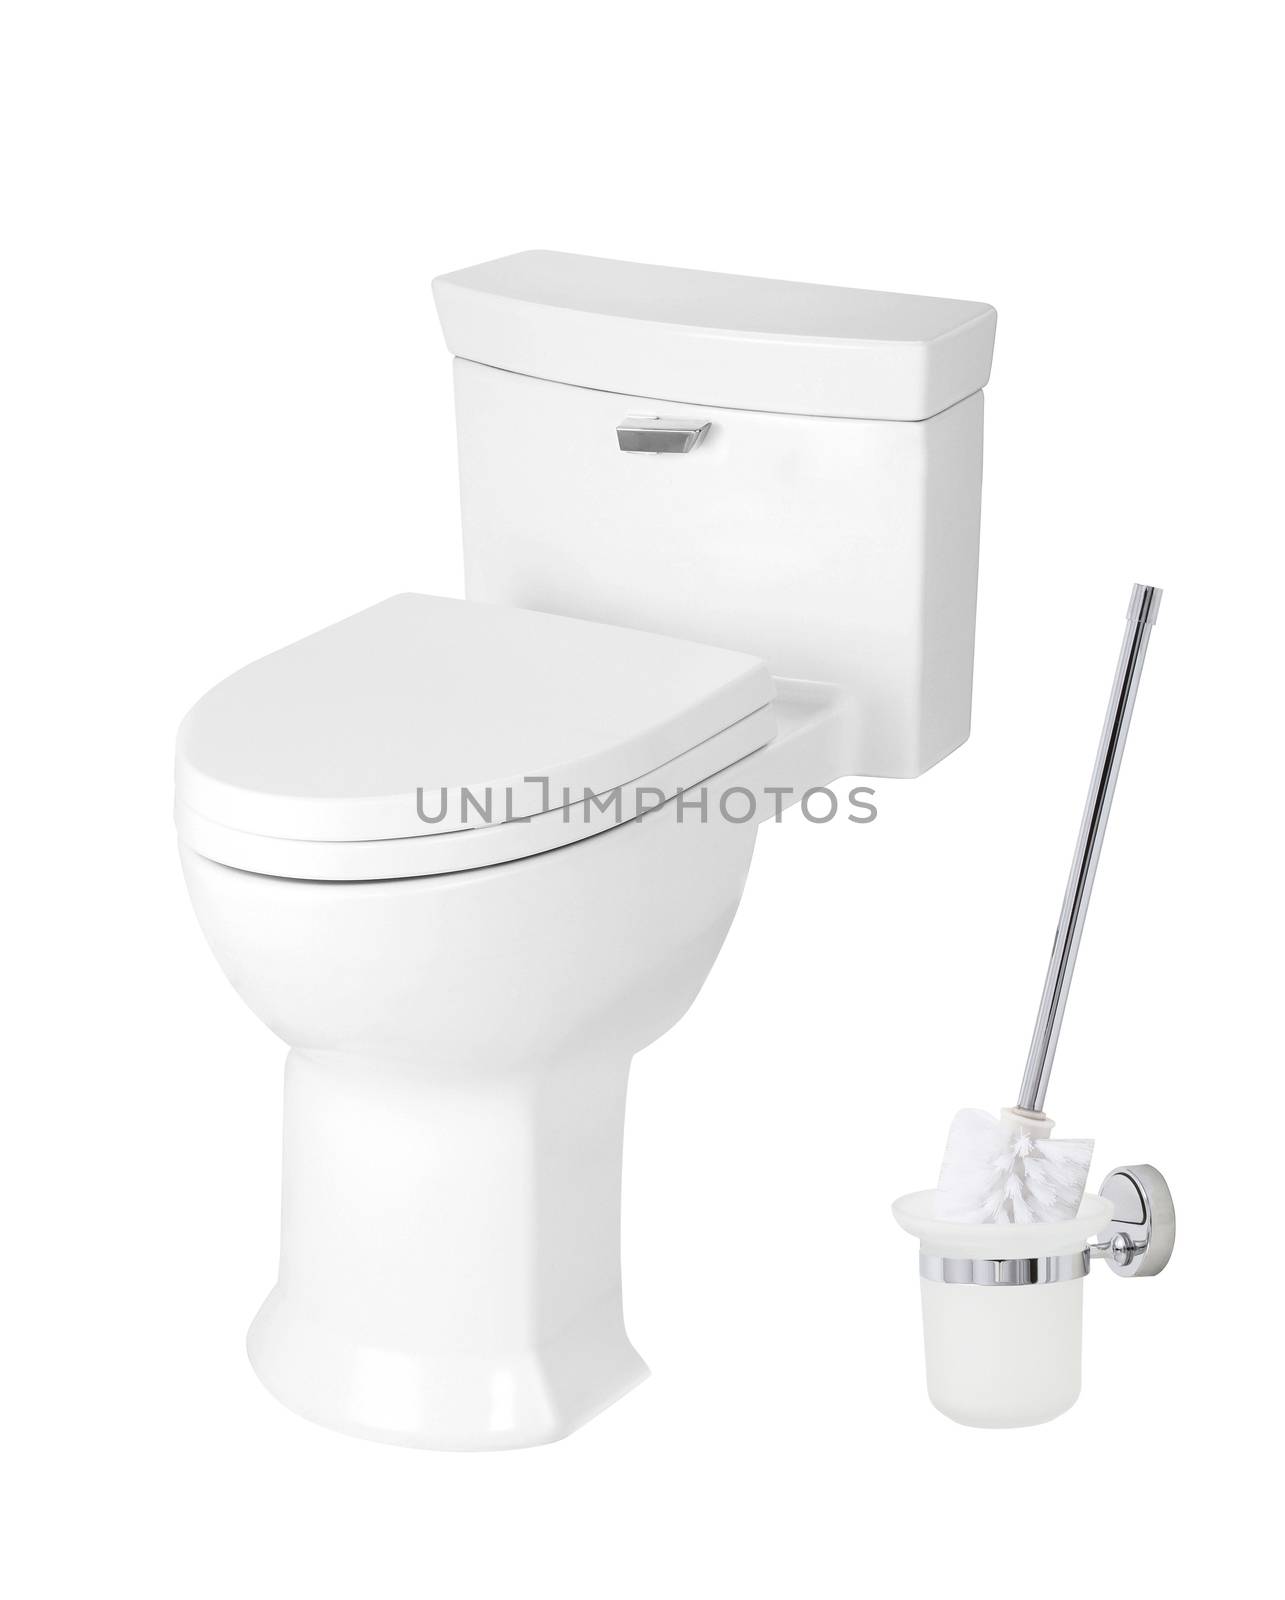 sanitary toilet bowl by ozaiachin